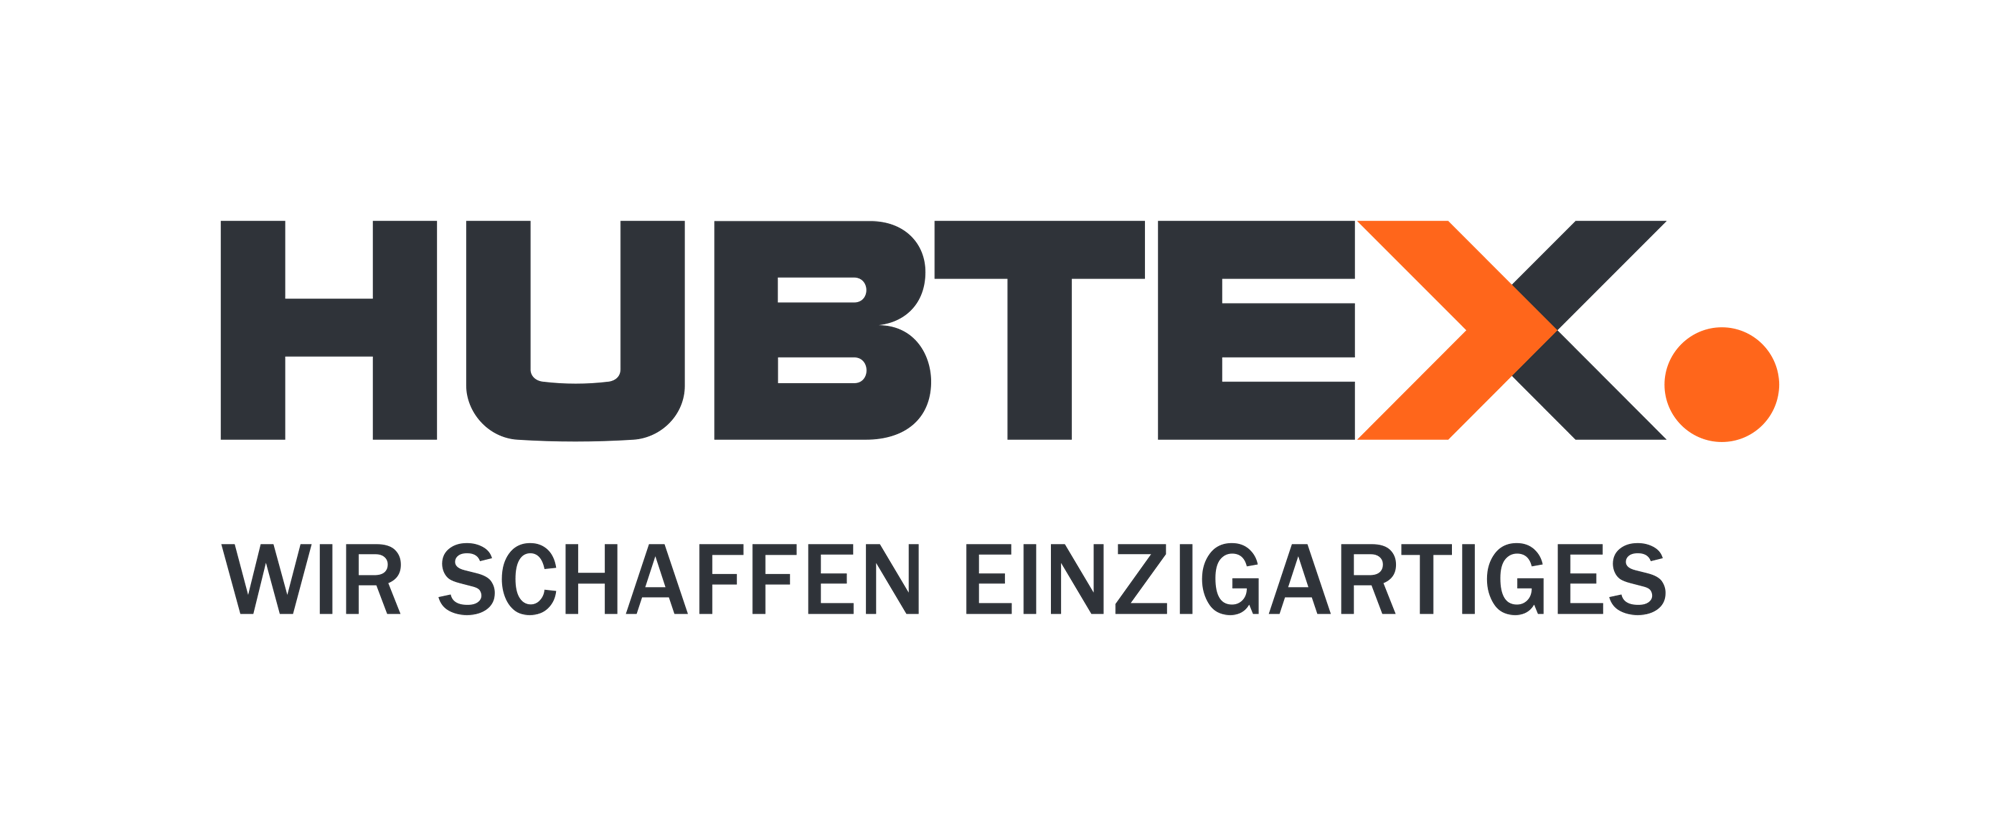 Hubtex Logo